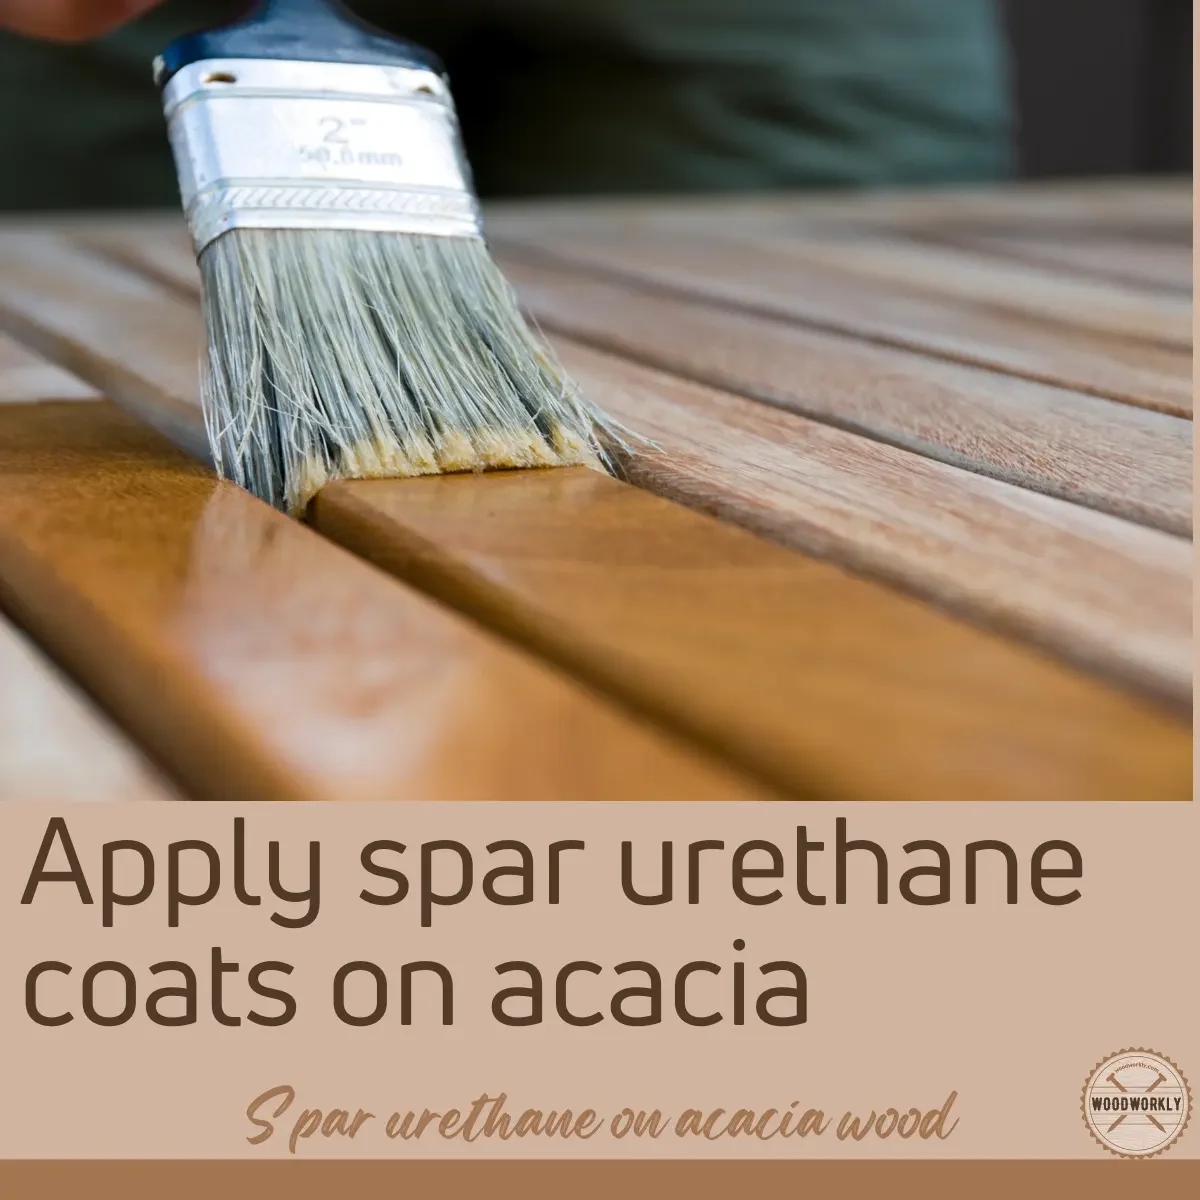 Apply spar urethane coats on acacia